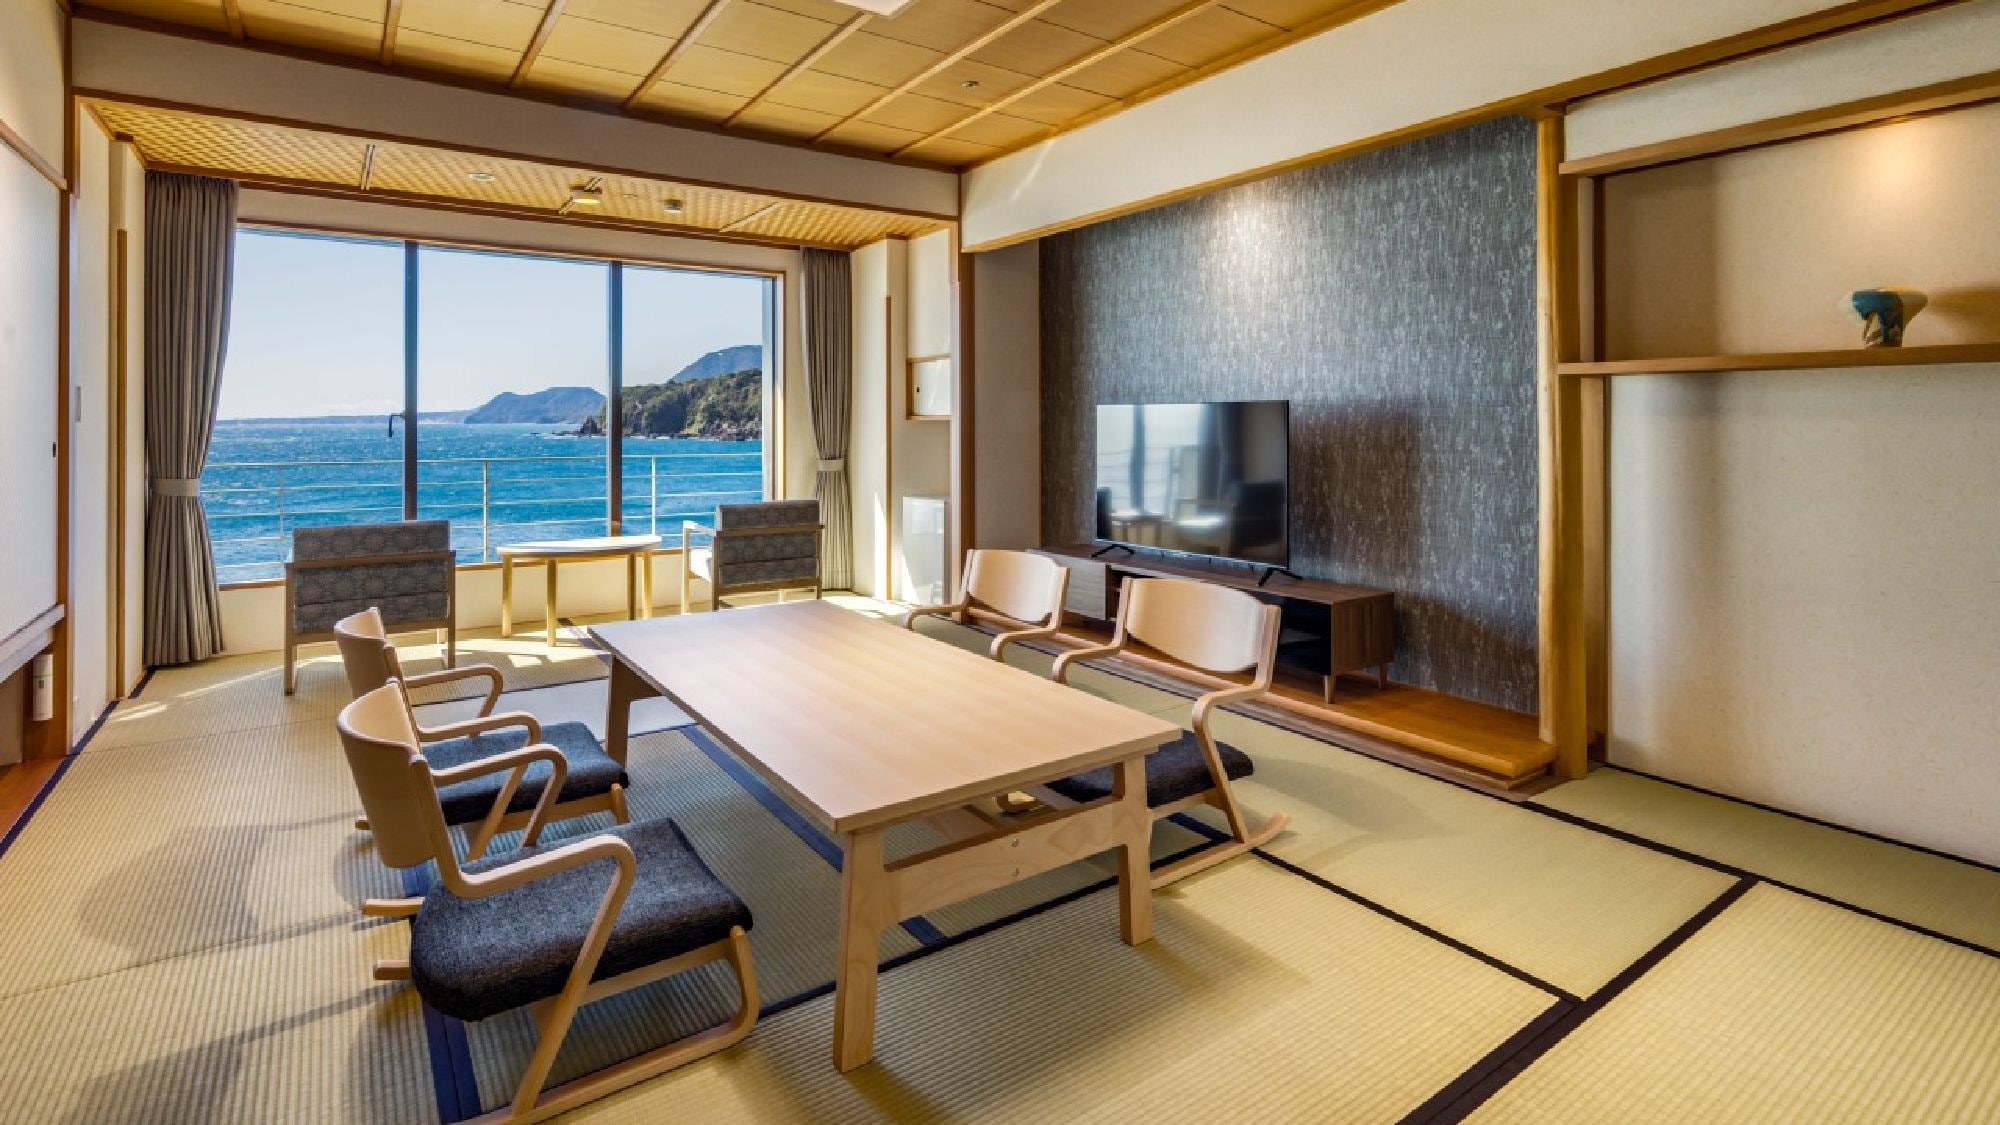 Upgraded Japanese-style room